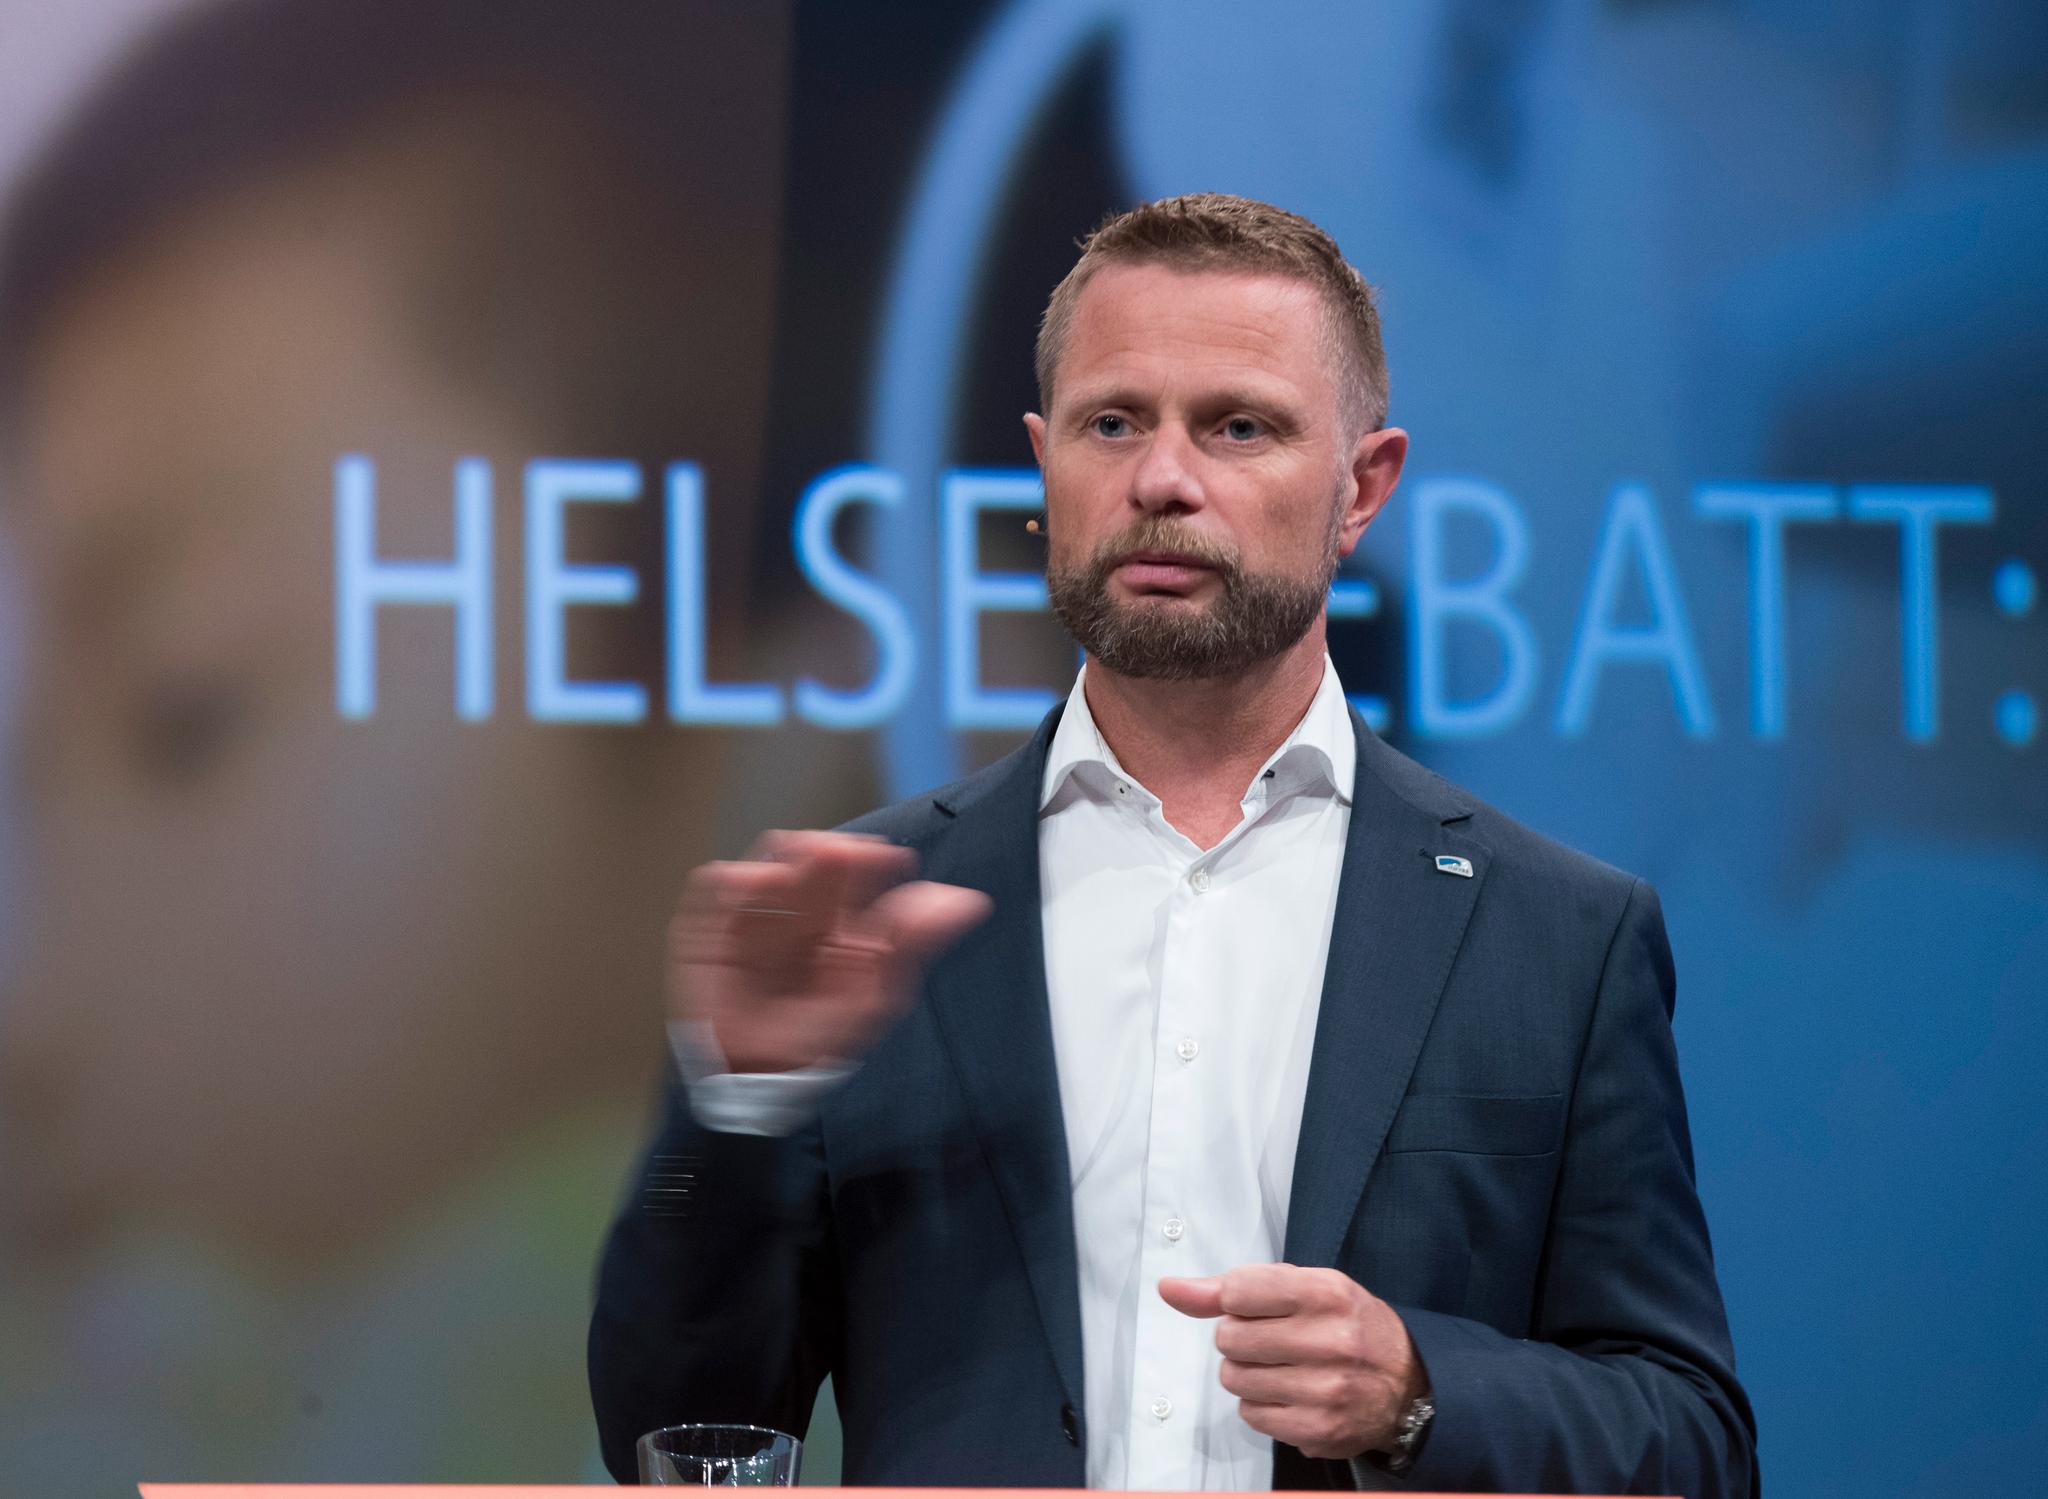 Helseminister Bent Høie (H) blir ny fylkesmann i Rogaland fra 2021. Foto: Terje Pedersen / NTB scanpix.